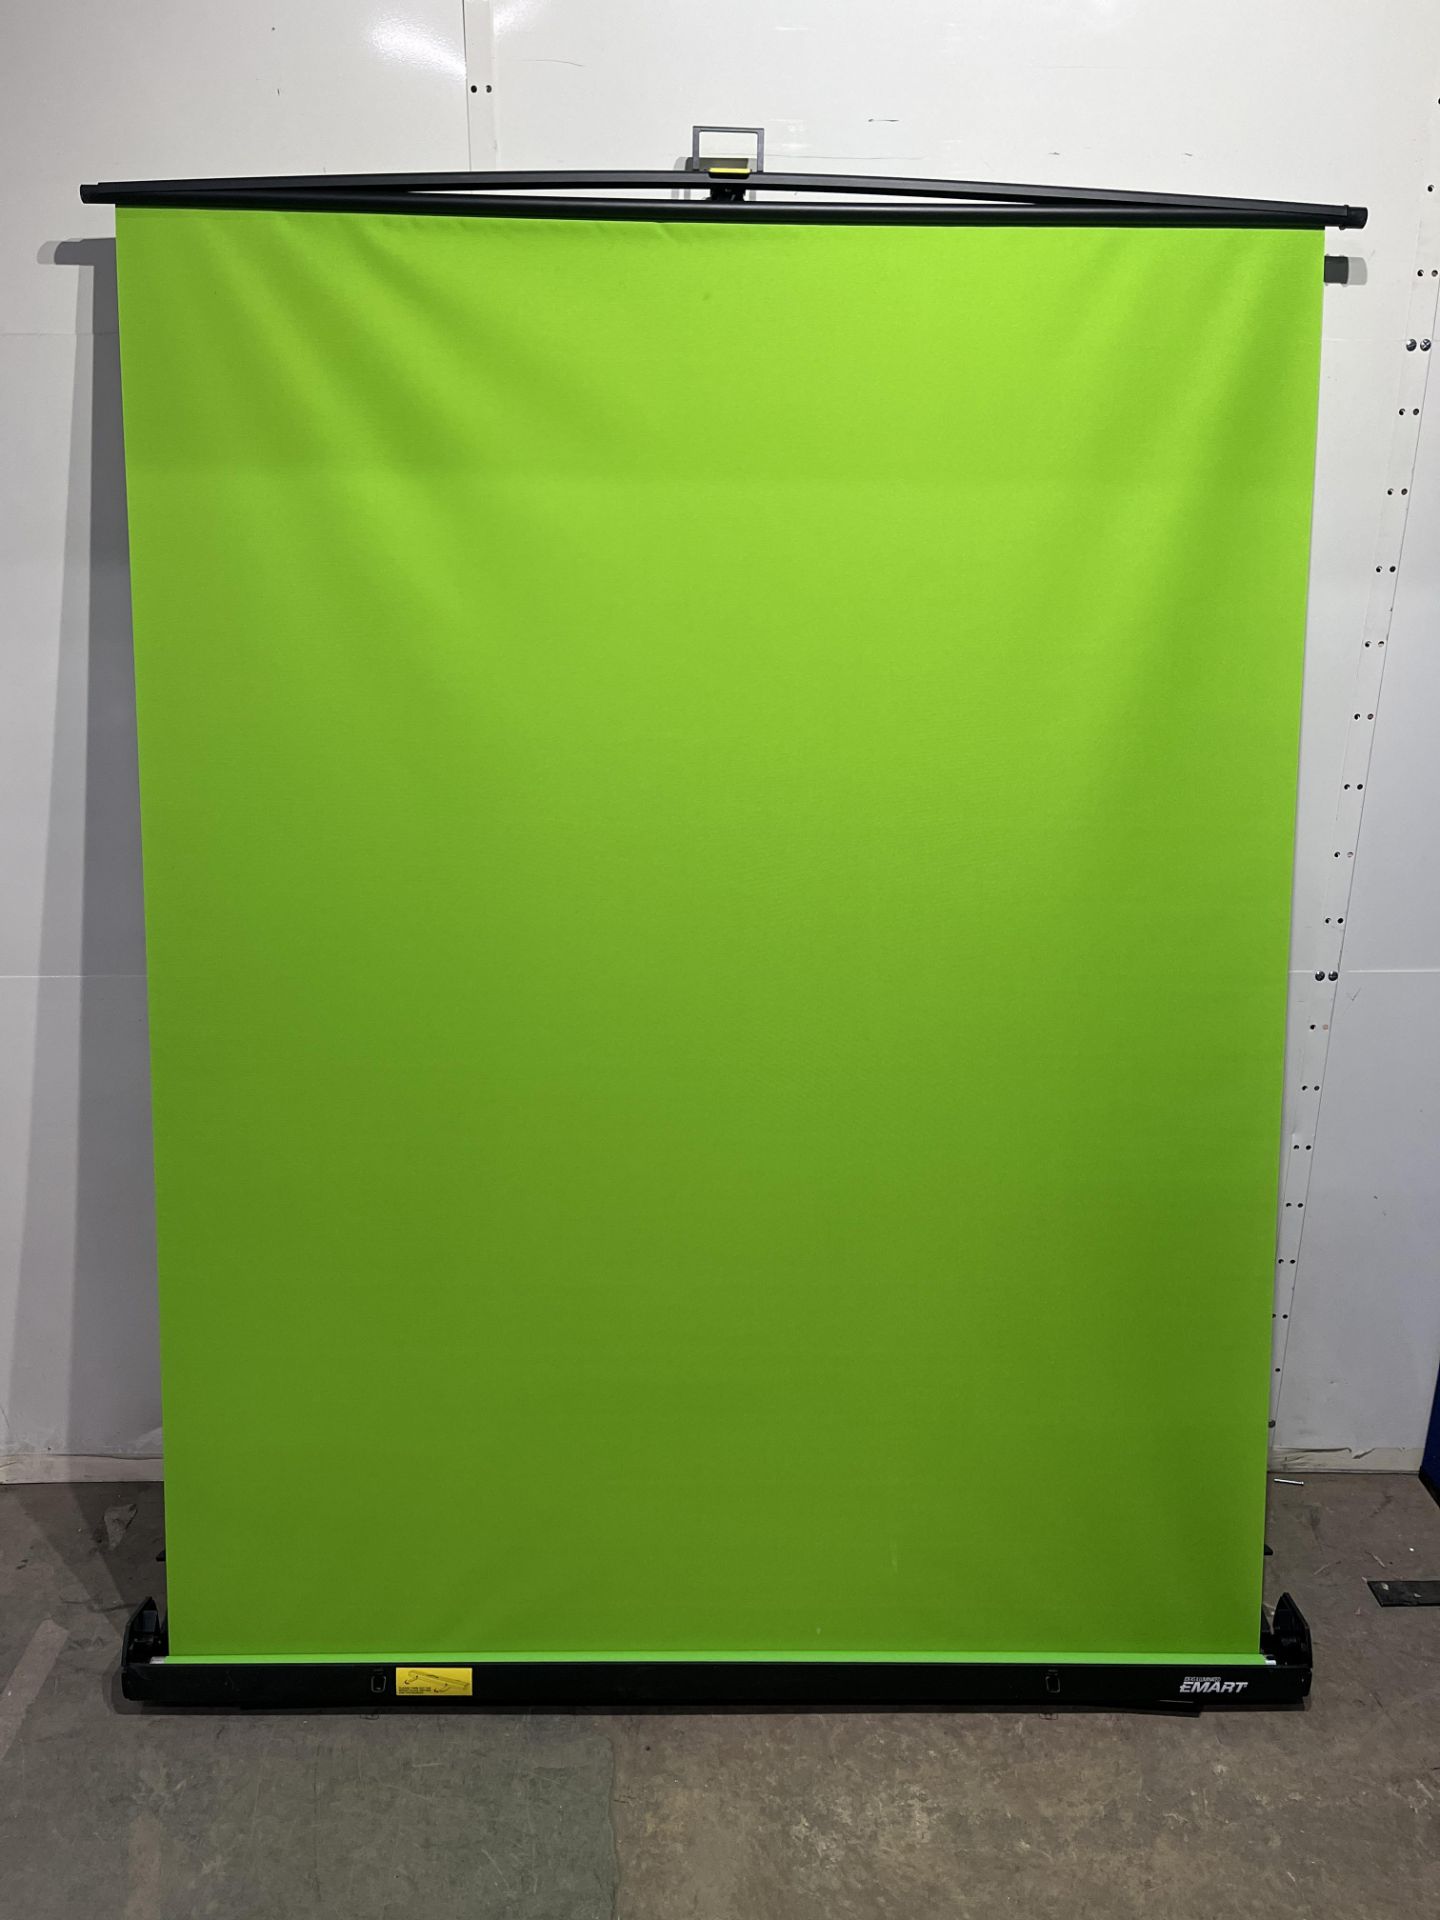 EMART Backdrop Freestanding Green Screen - Image 4 of 4